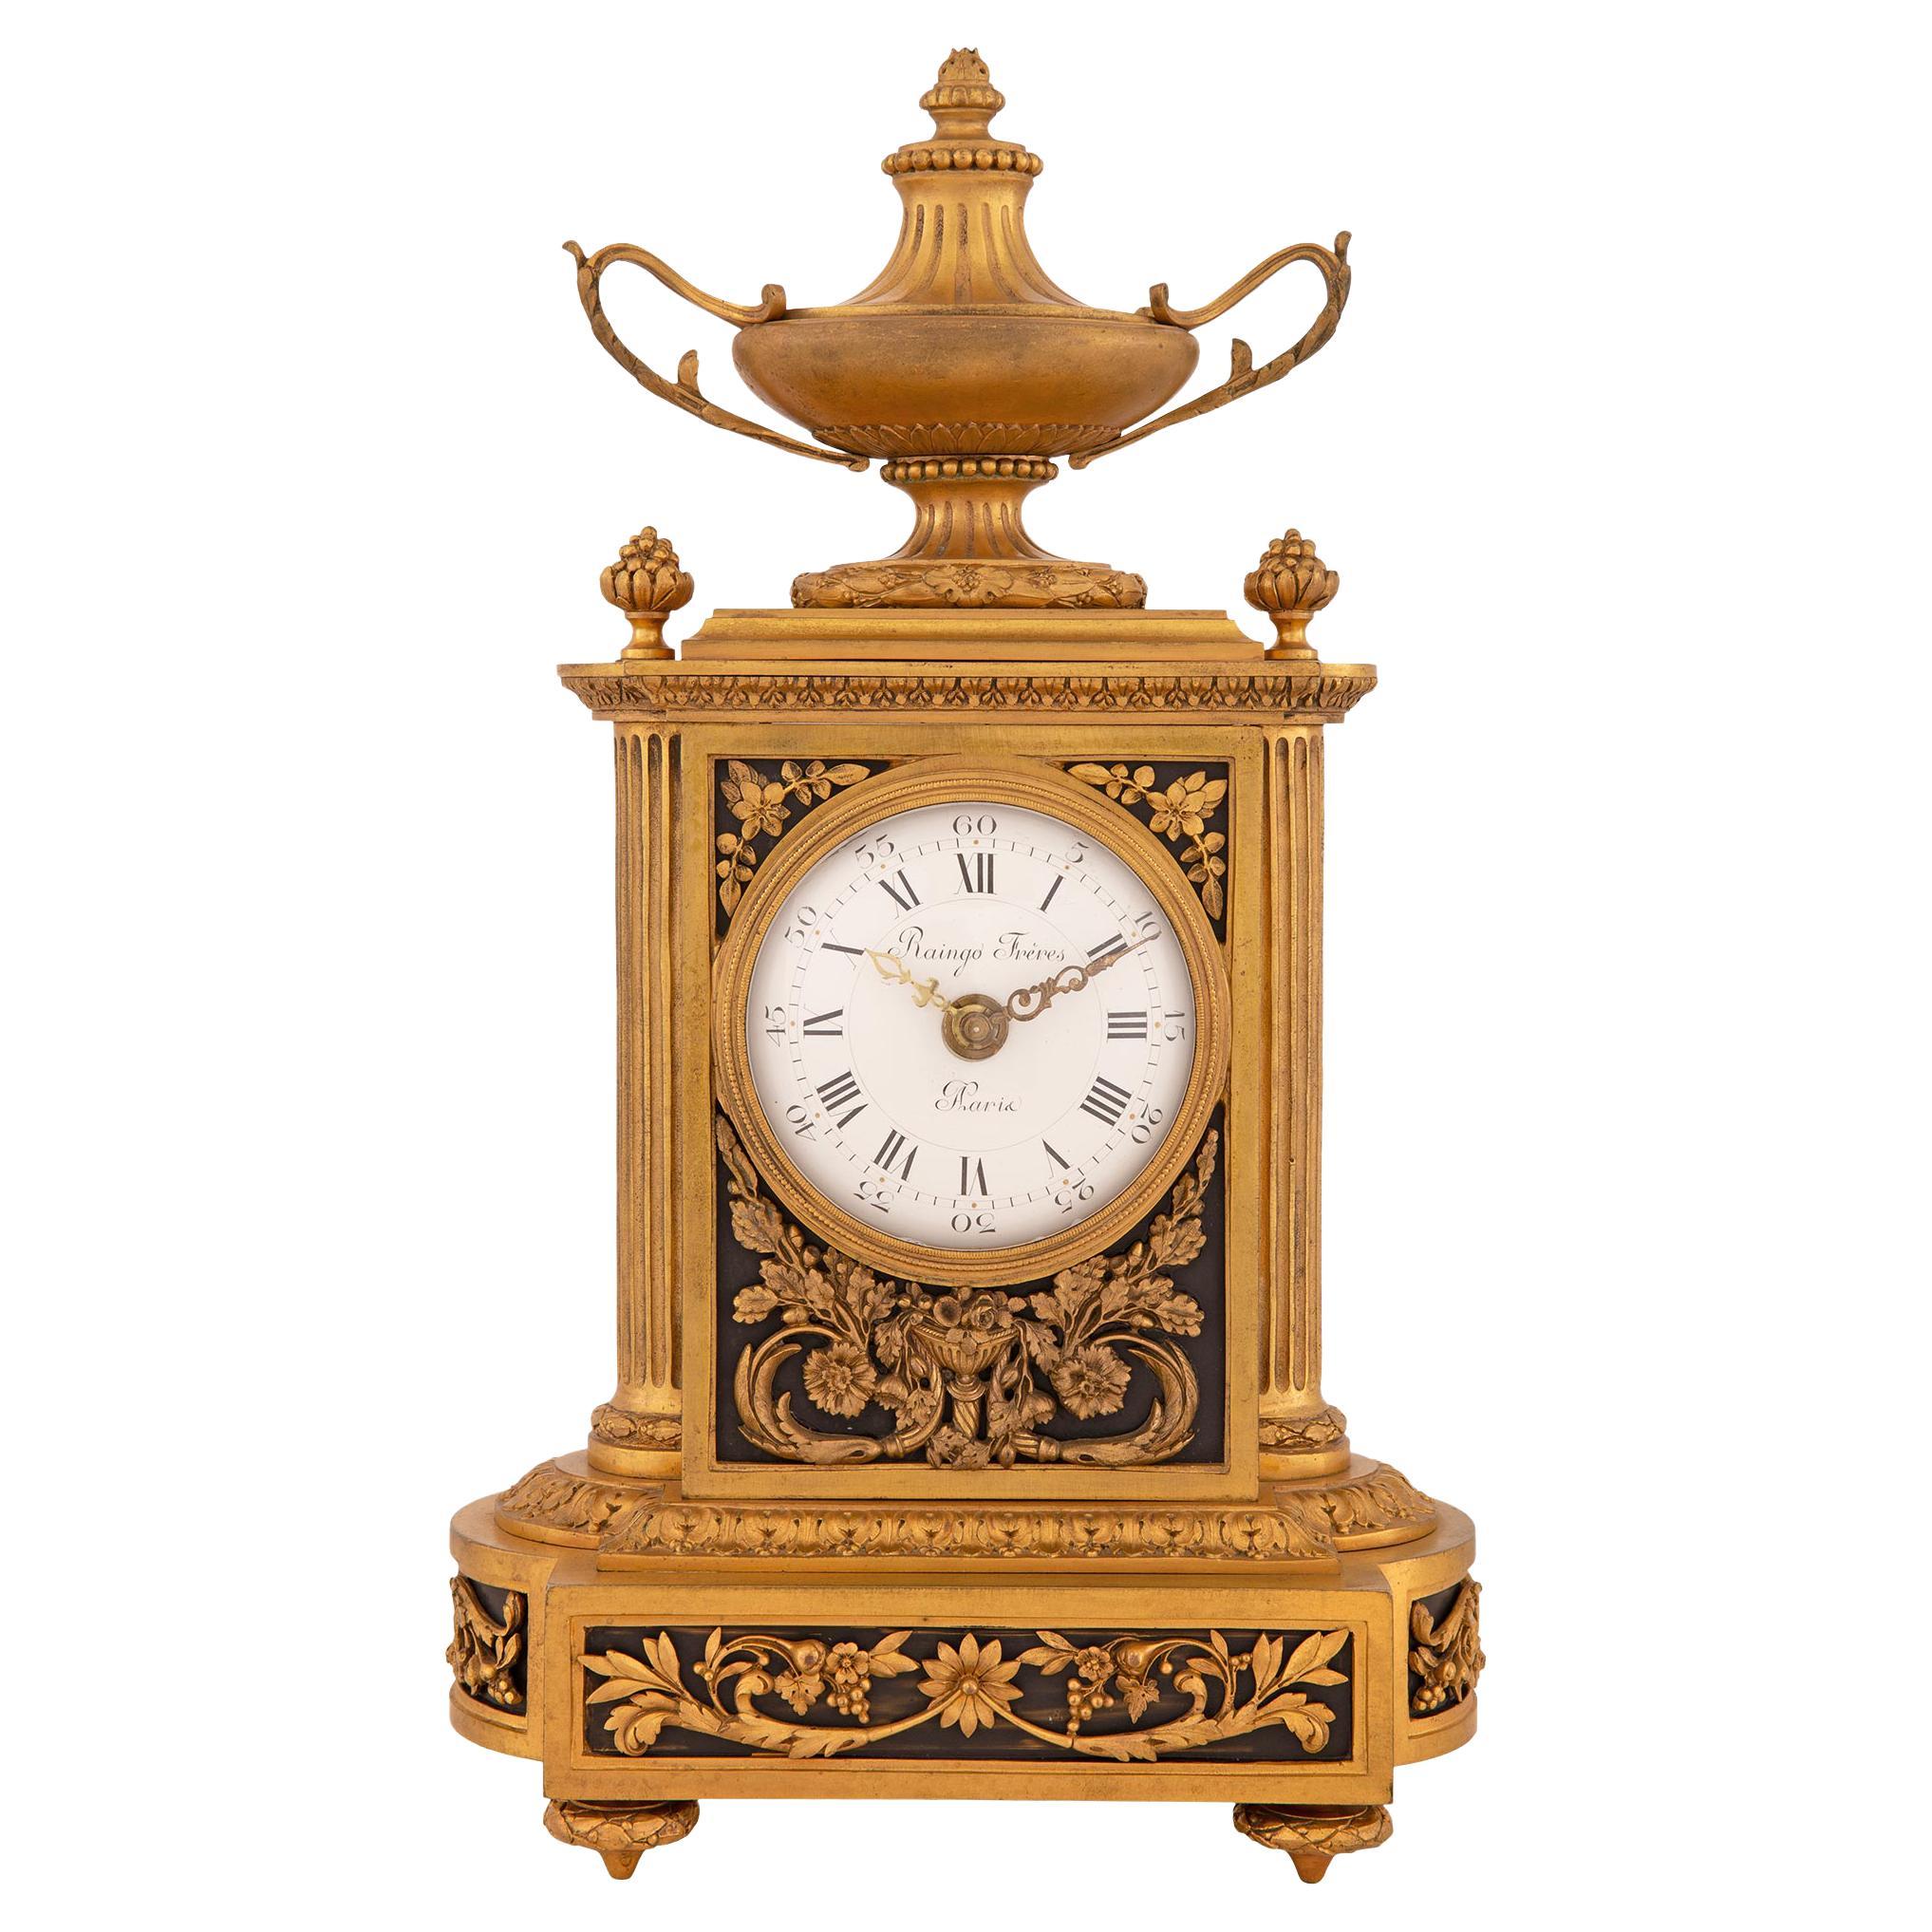 French 19th Century Louis XVI Style Ormolu Clock Signed ''Raingo Freres, Paris